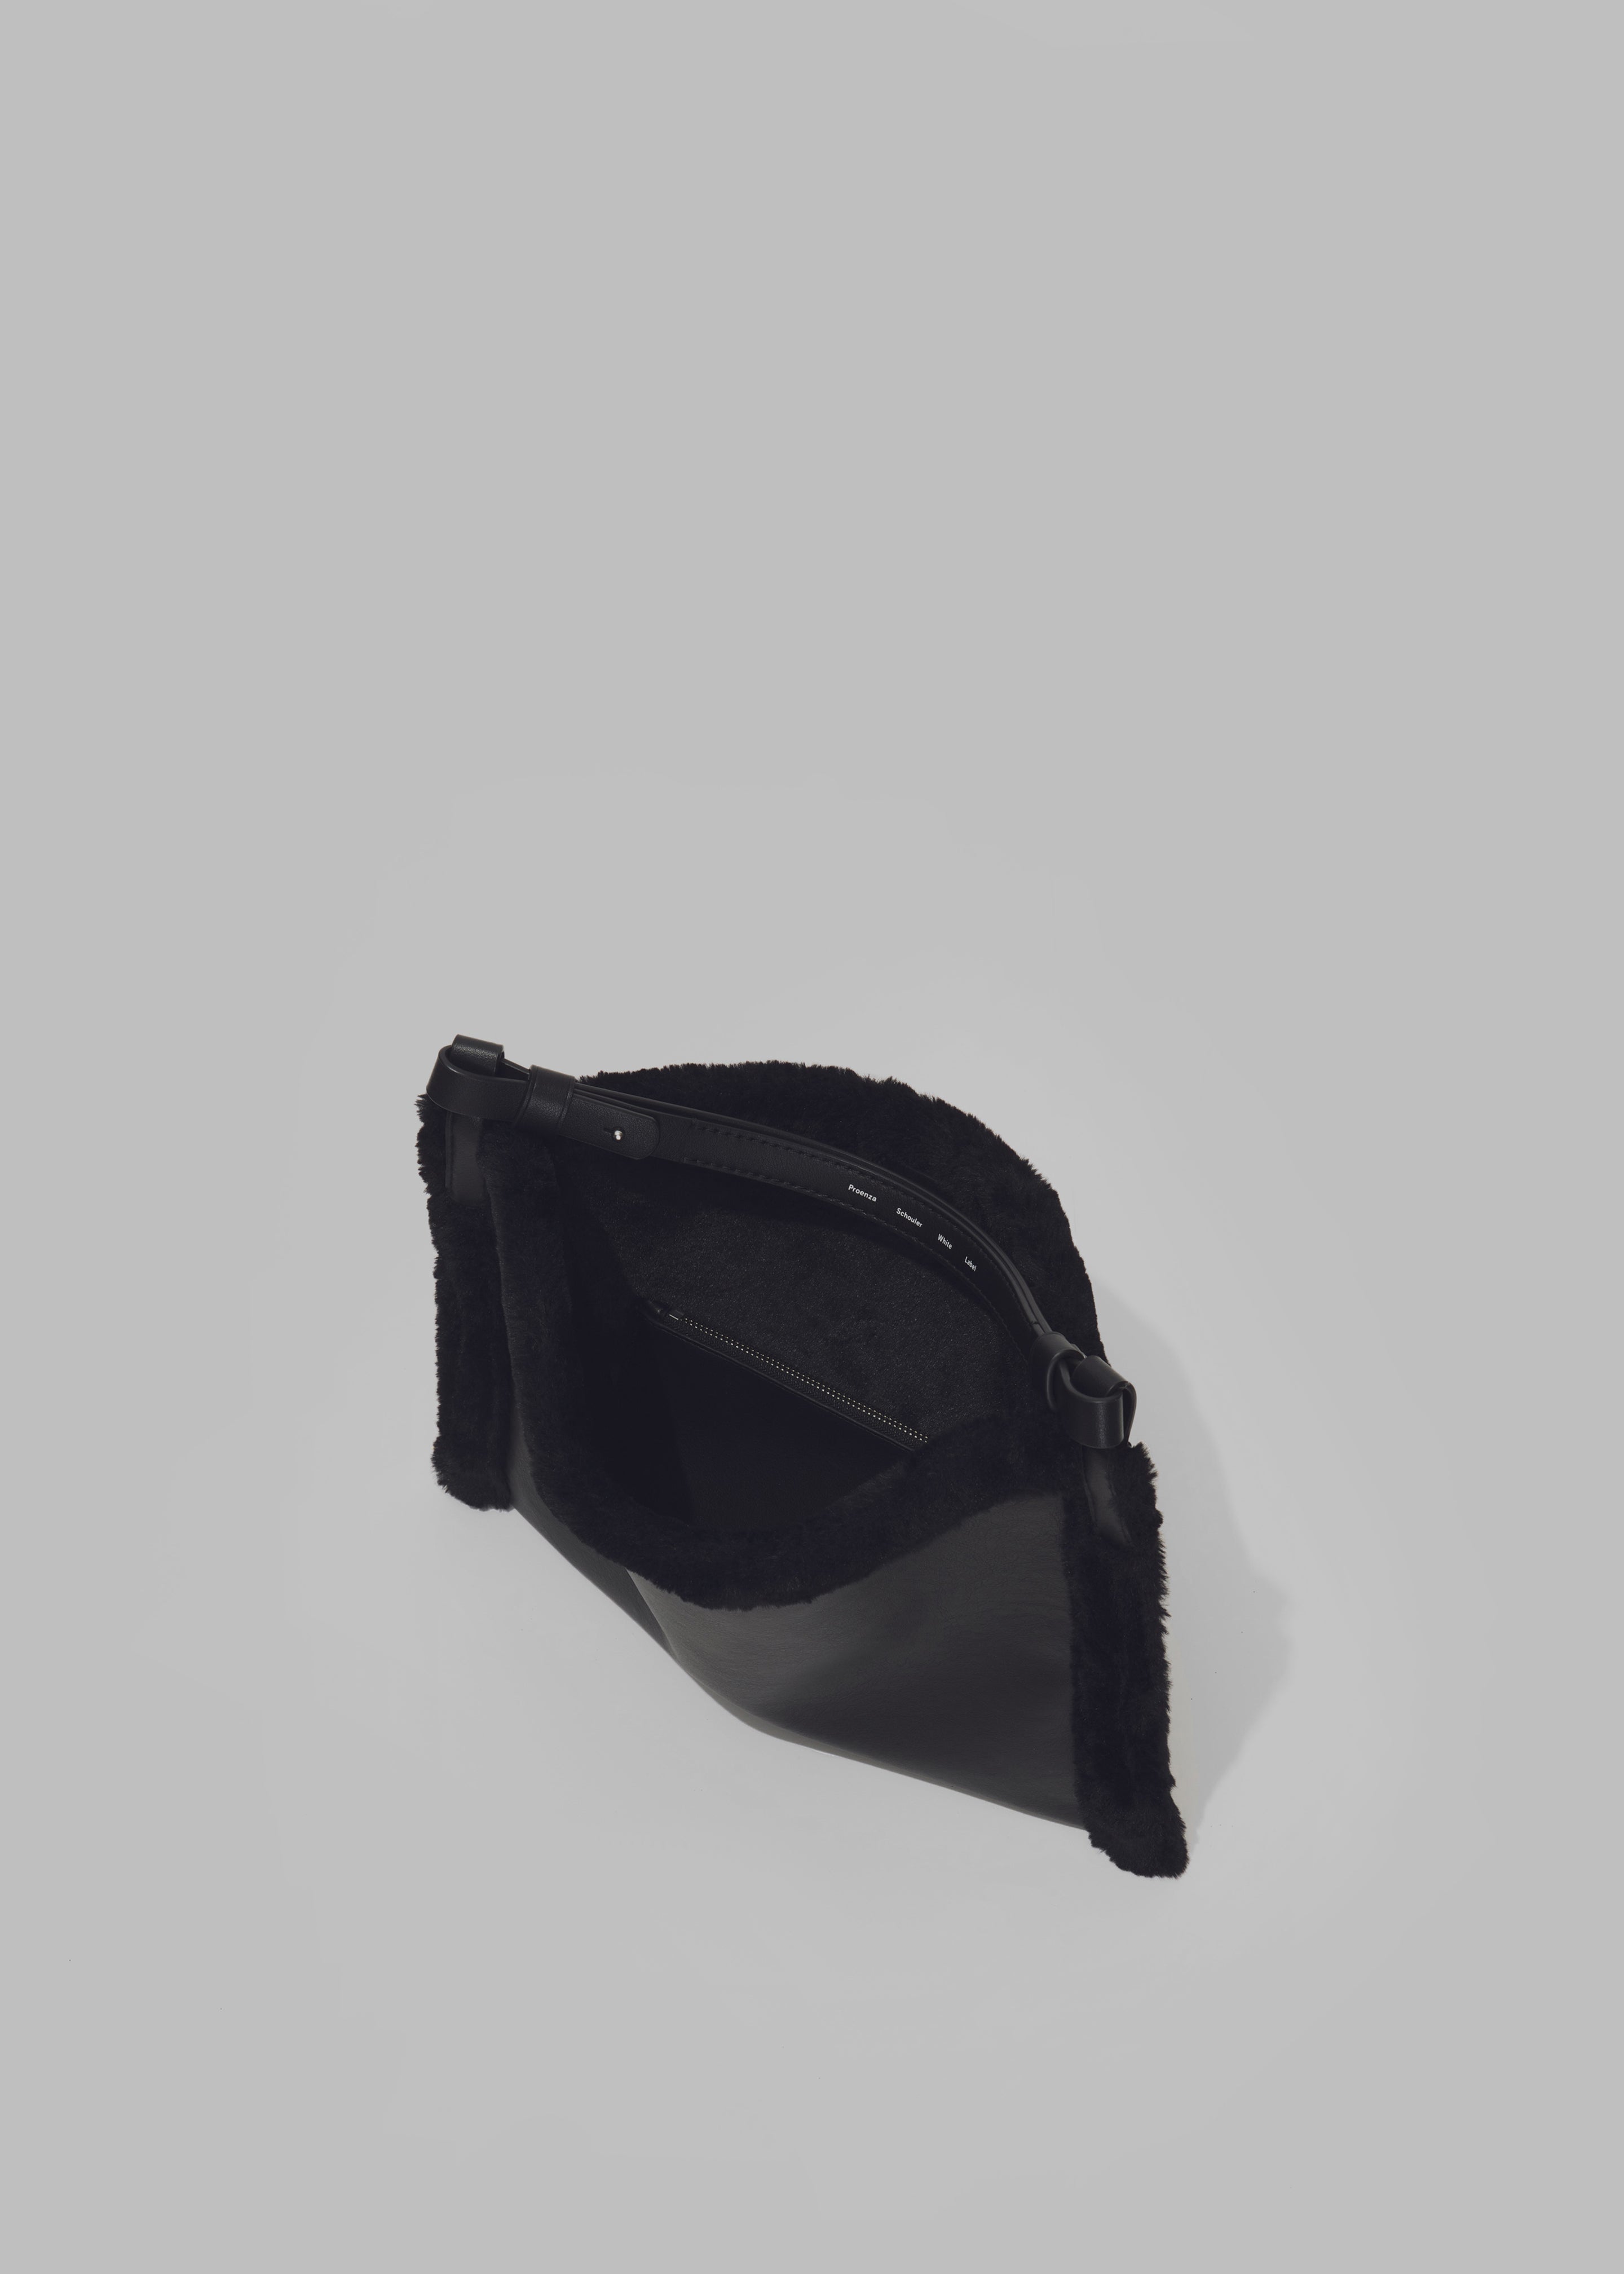 Proenza Schouler White Label Minetta Faux Shearling Bag - Black - 3